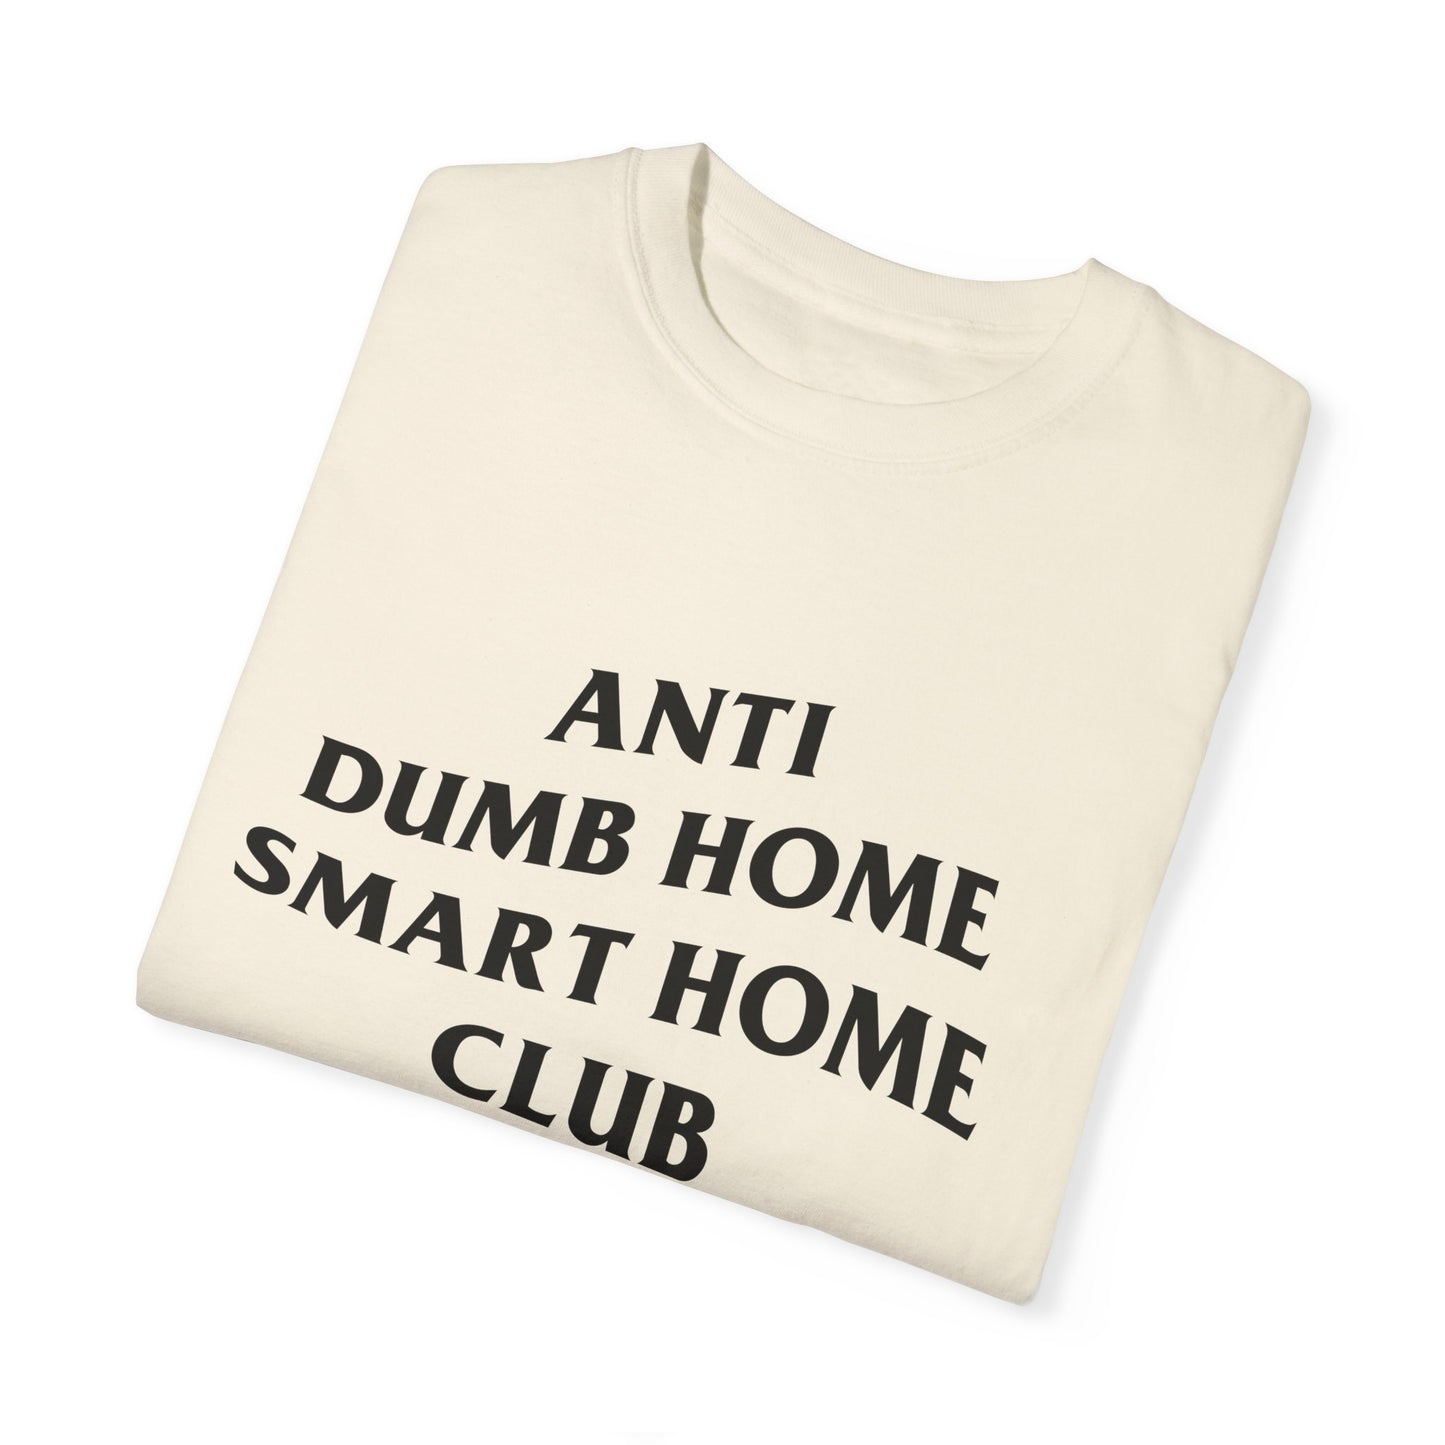 Anti Dumb Home Smart Home Club Tee